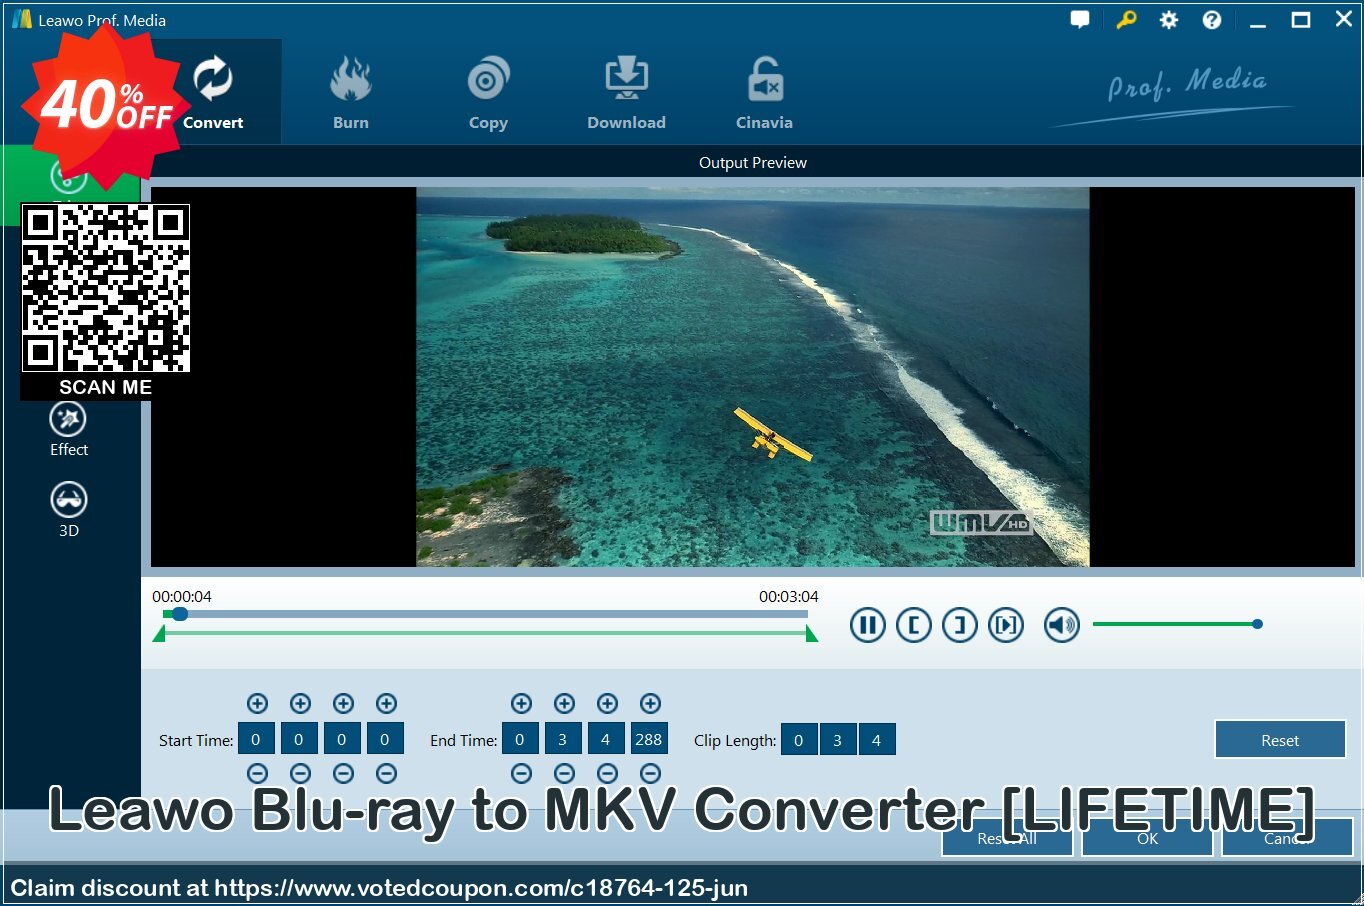 Leawo Blu-ray to MKV Converter /LIFETIME/ Coupon, discount Leawo coupon (18764). Promotion: Leawo discount